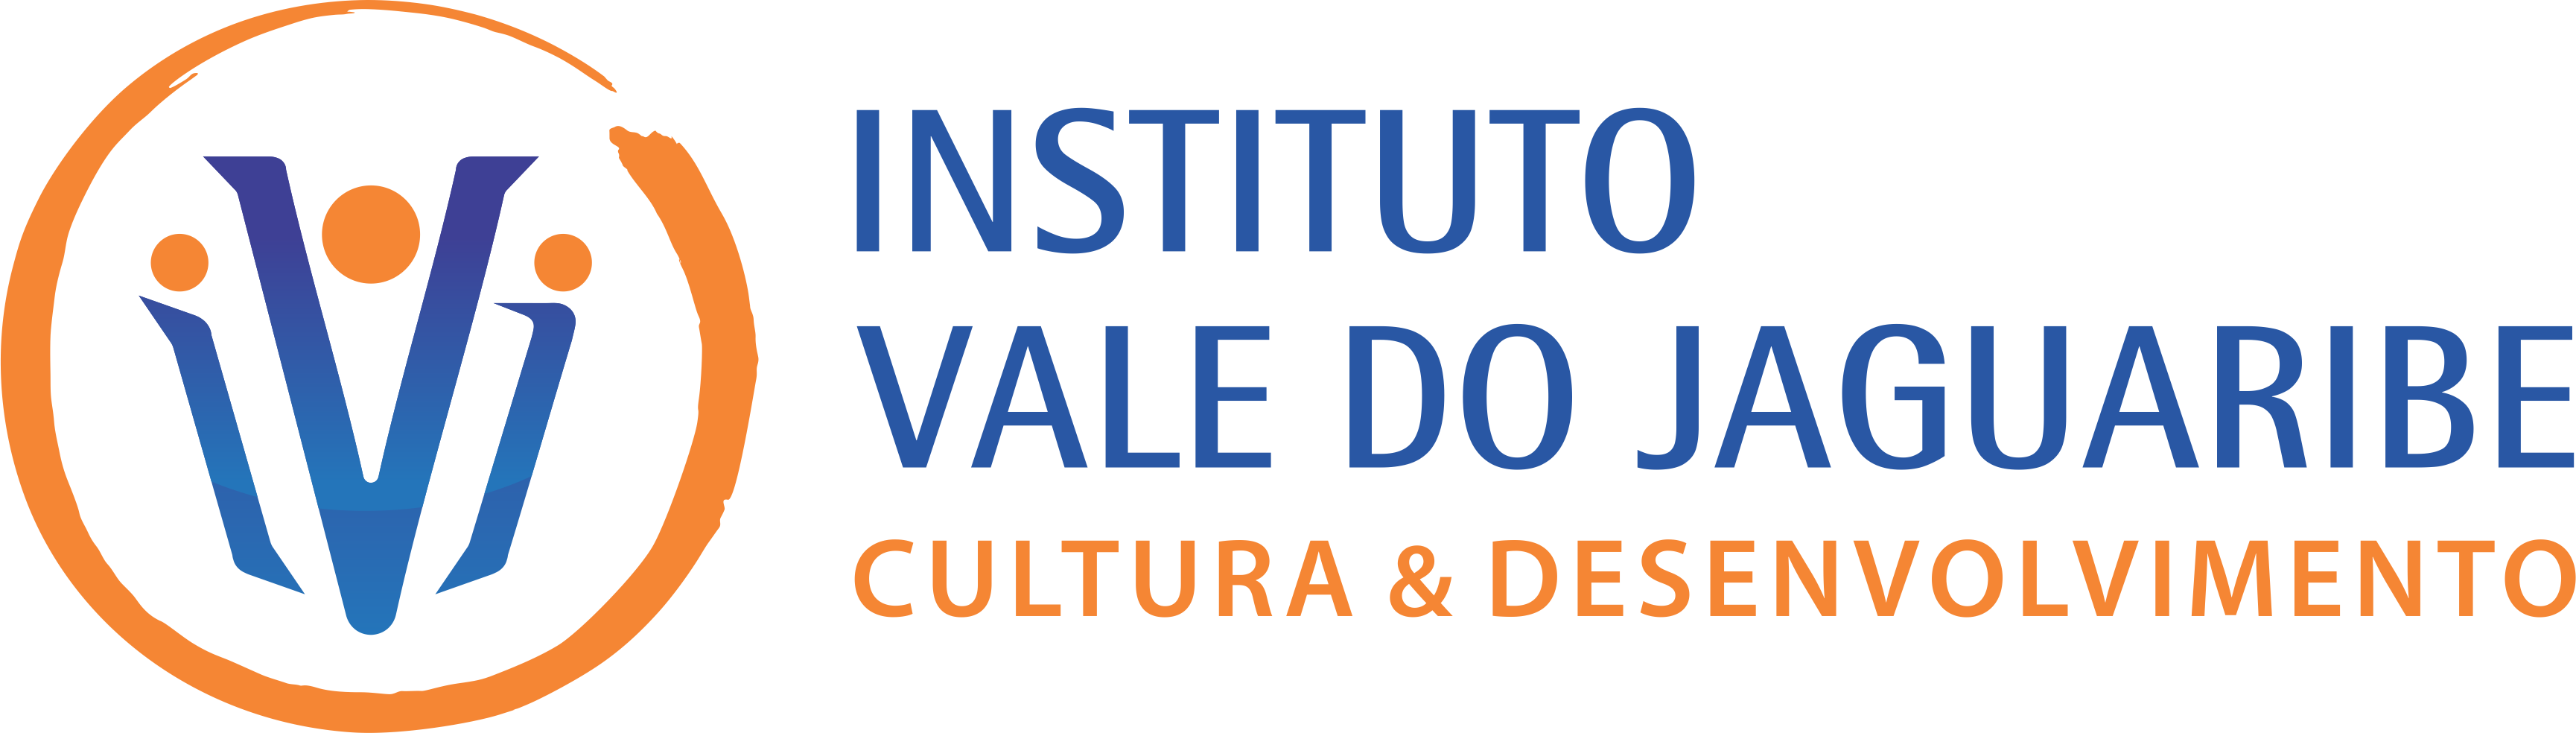 Instituto Vale do Jaguaribe